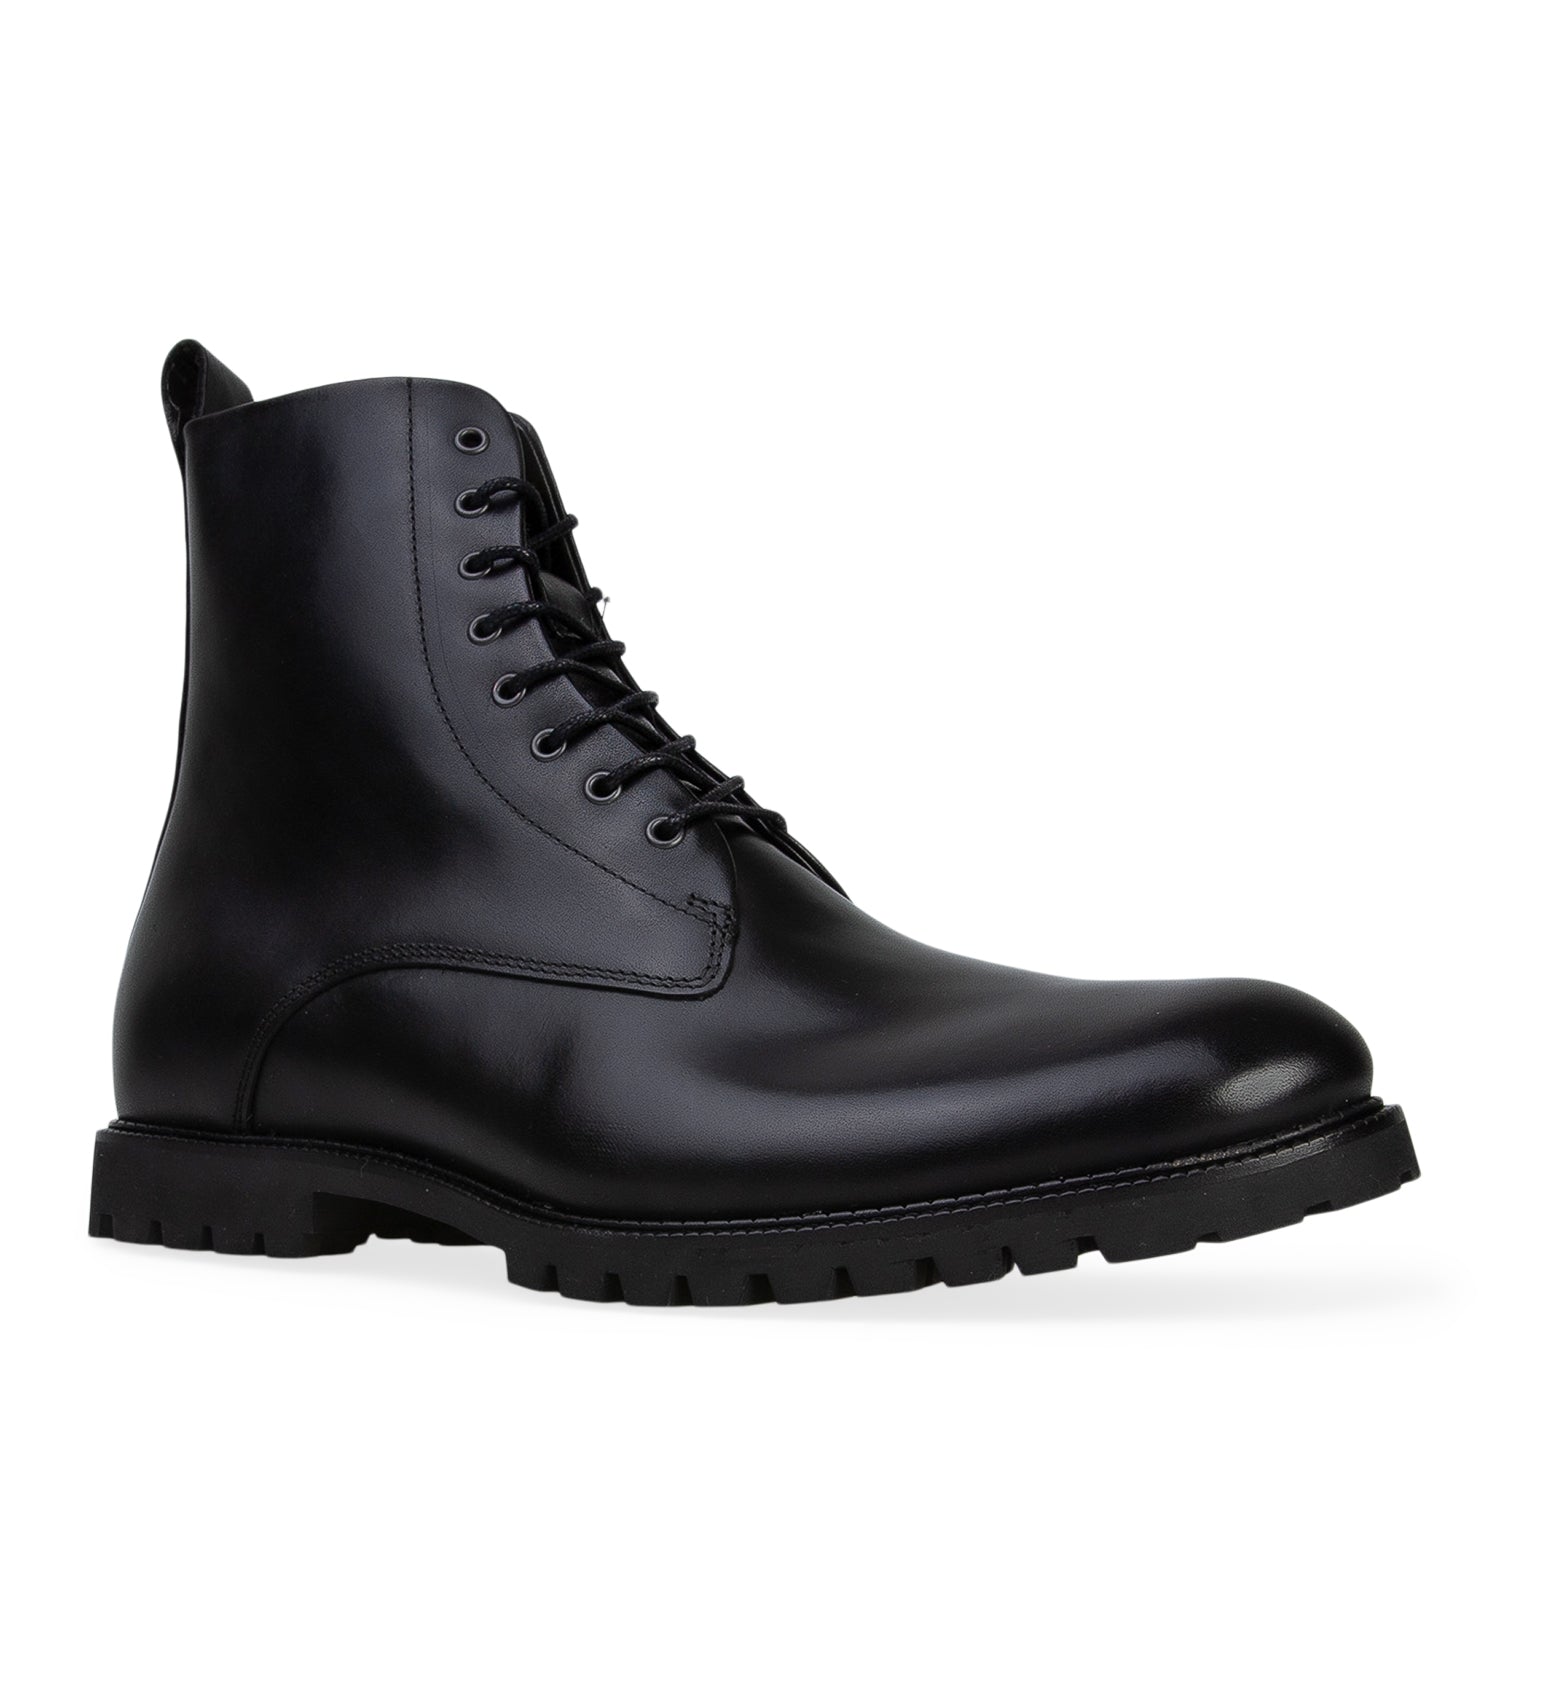 Selenium 2 Black Leather Boots | Bared Footwear